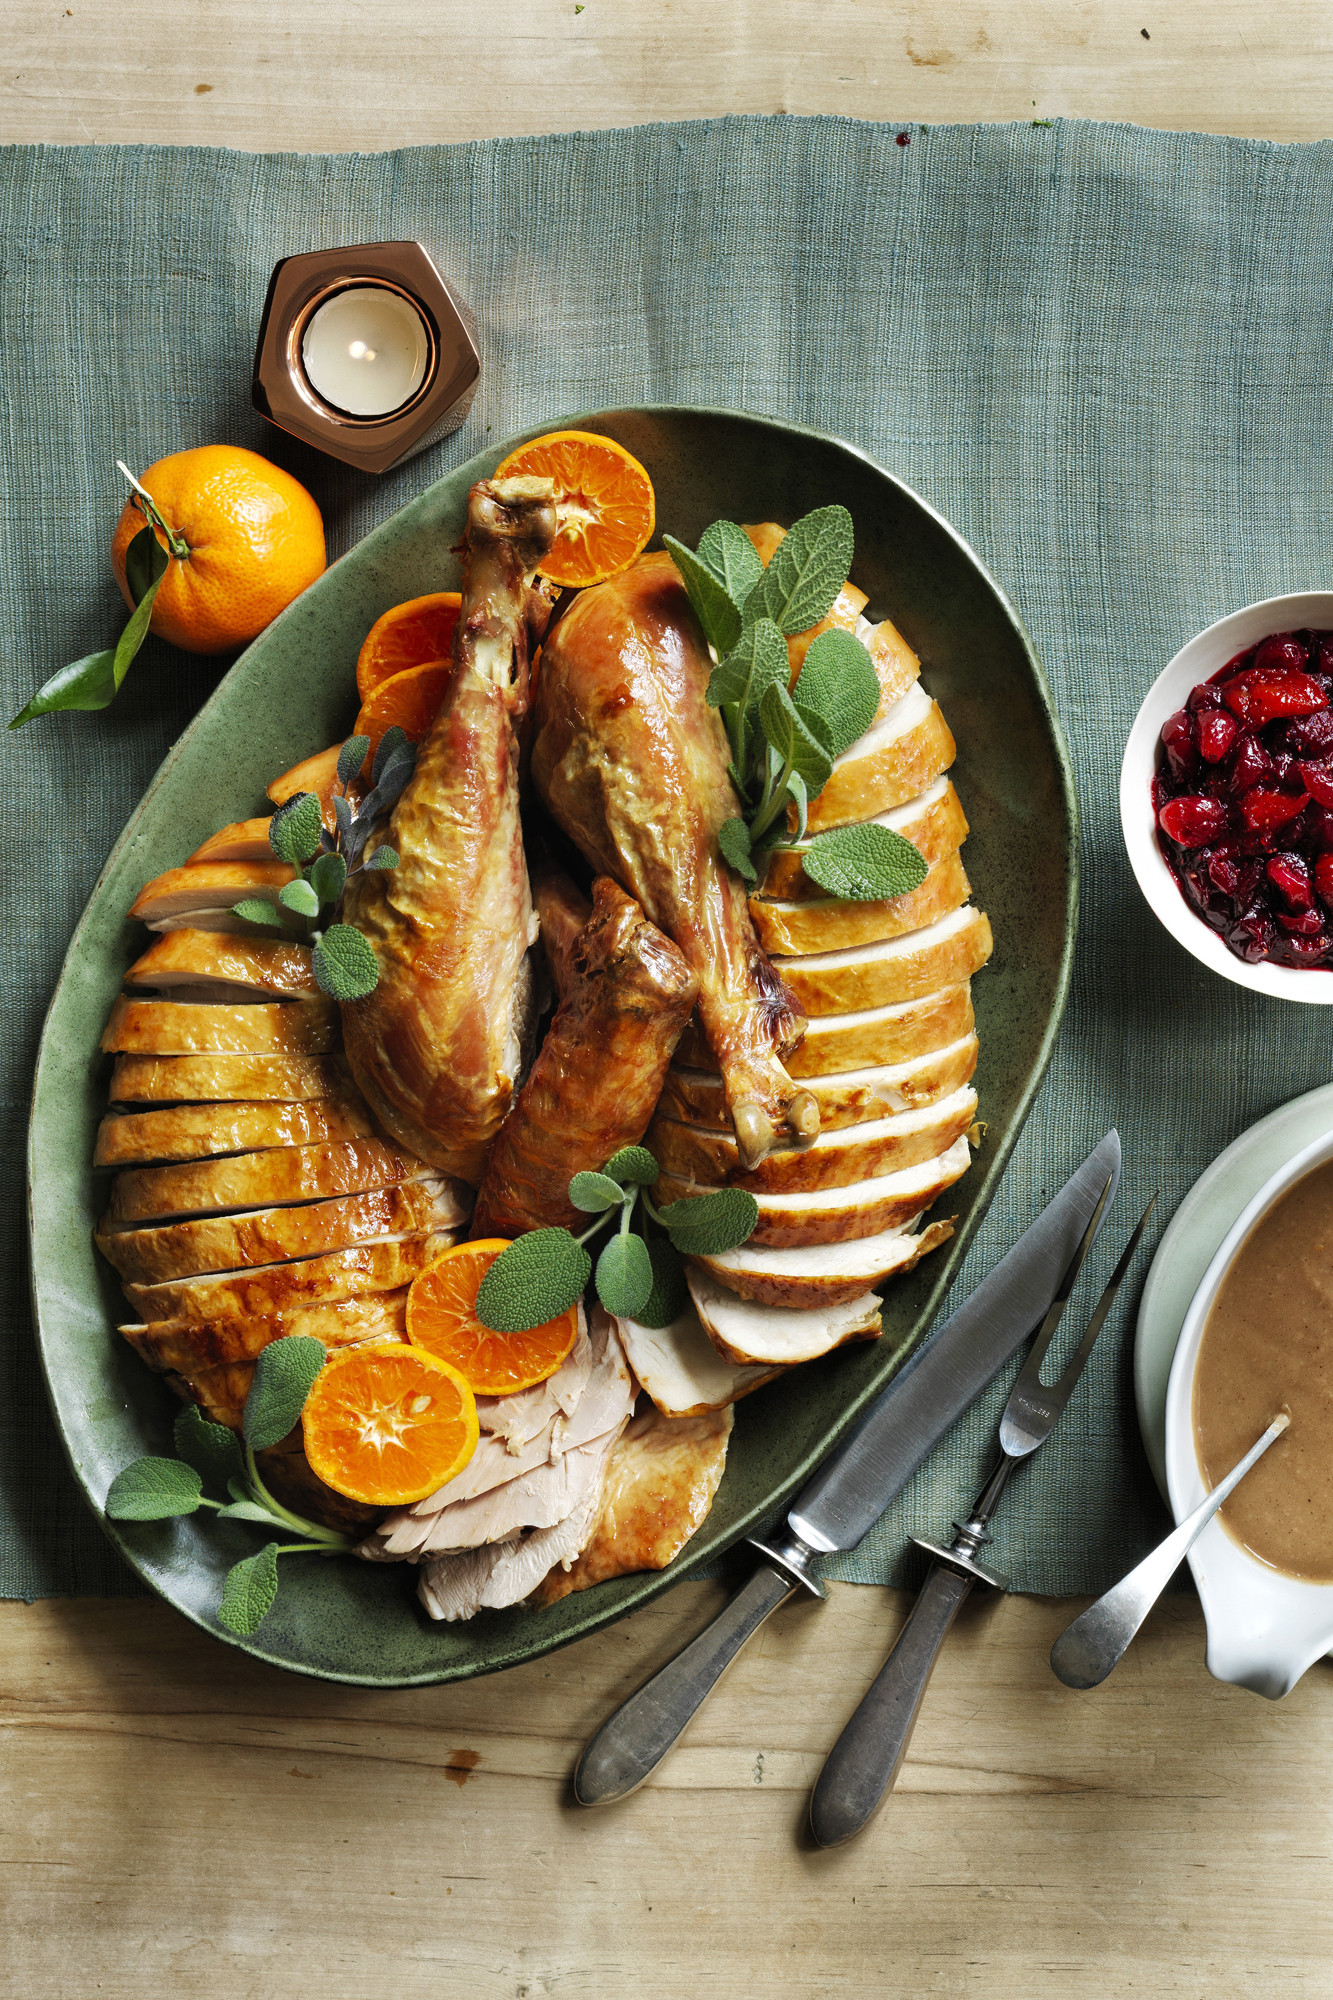 Thanksgiving Turkey Recipes
 20 Best Thanksgiving Turkey Recipes Easy Roast Turkey